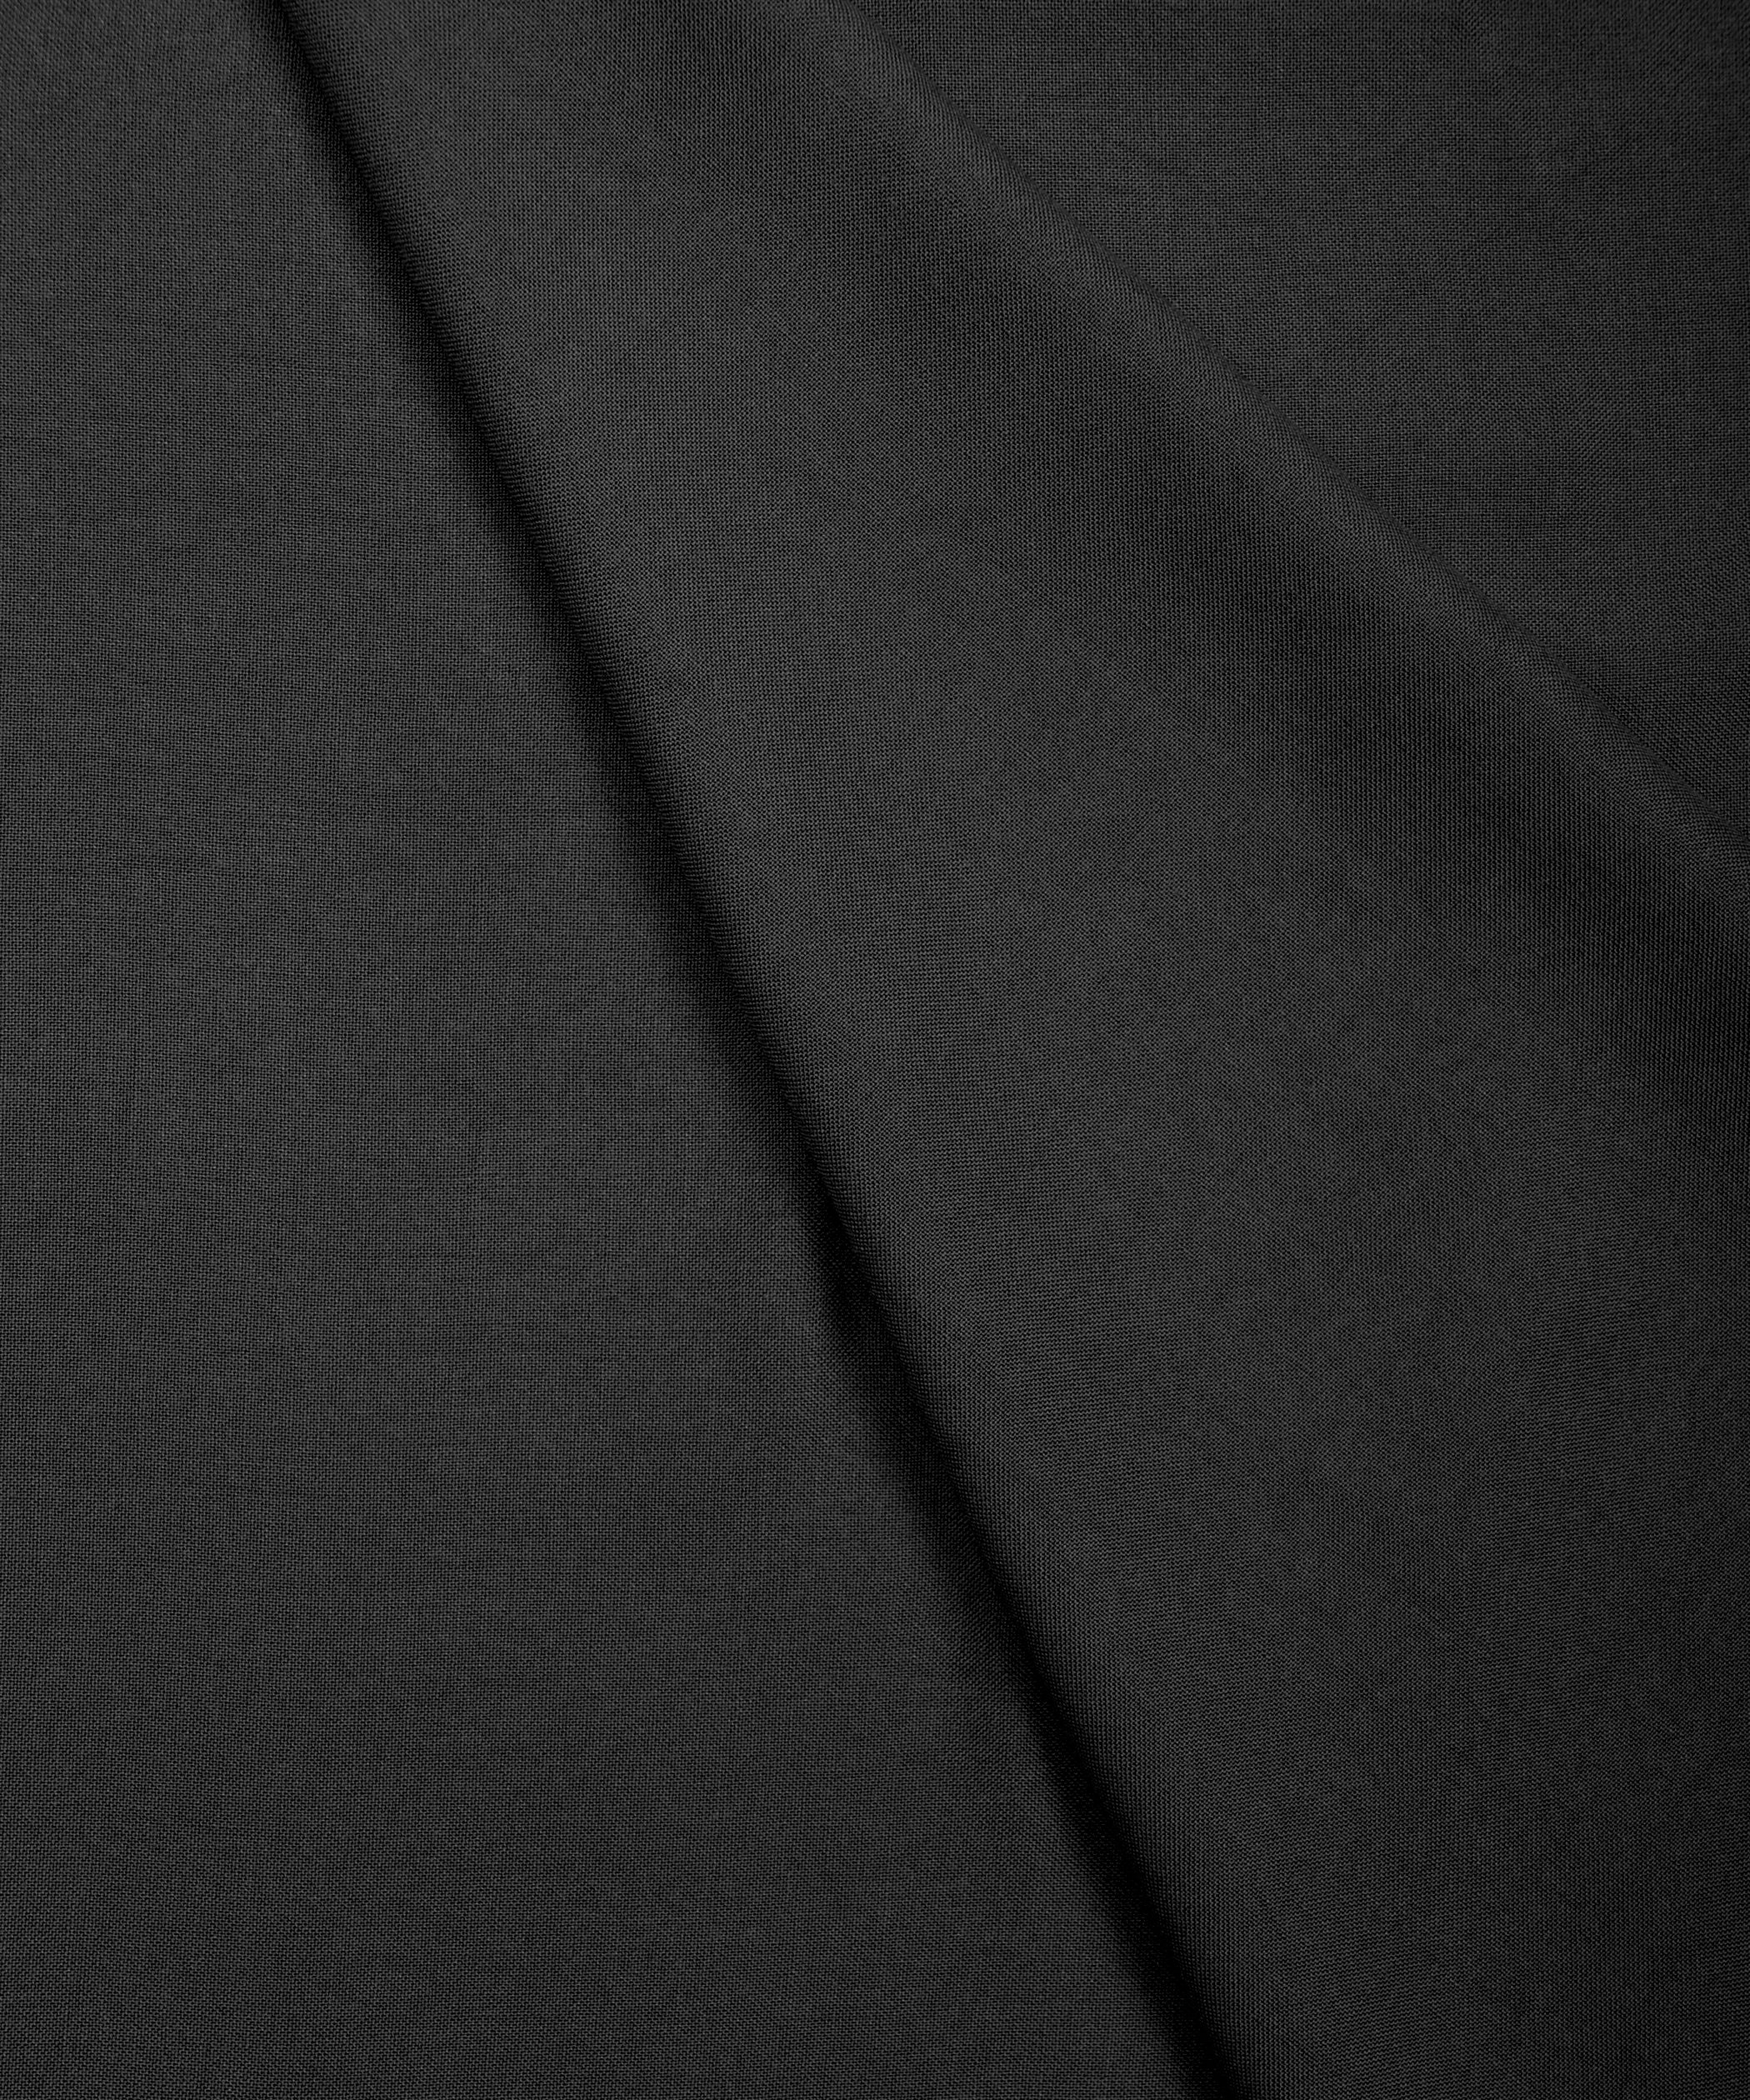 Black Plain Dyed Rayon Fabric